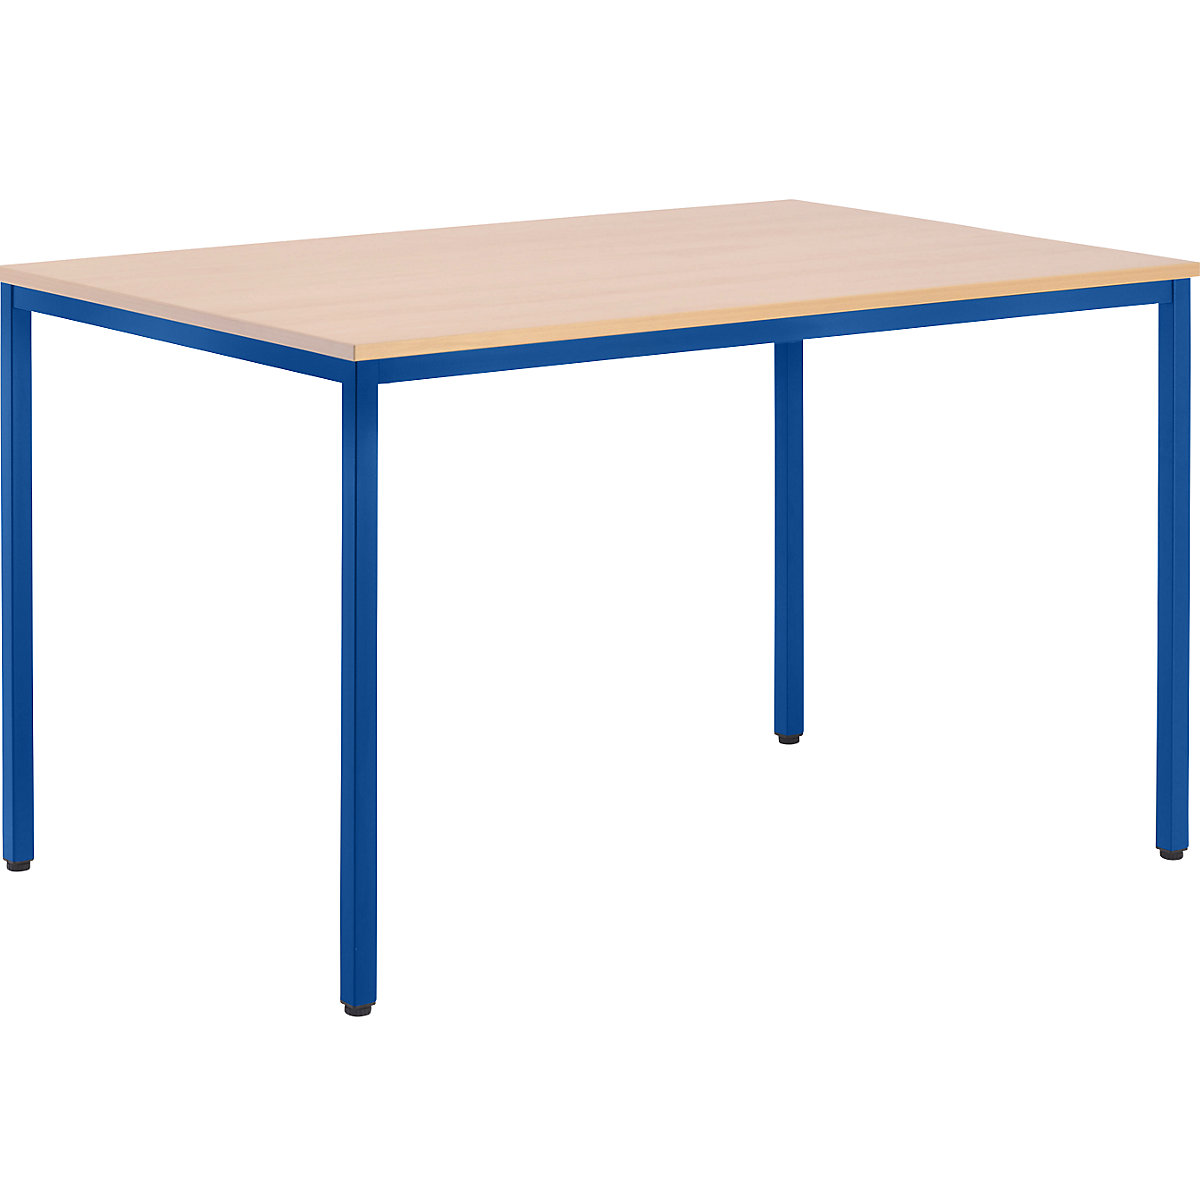 Multi-purpose table – eurokraft basic, HxWxD 720 x 1200 x 800 mm, top in beech finish, gentian blue frame-3